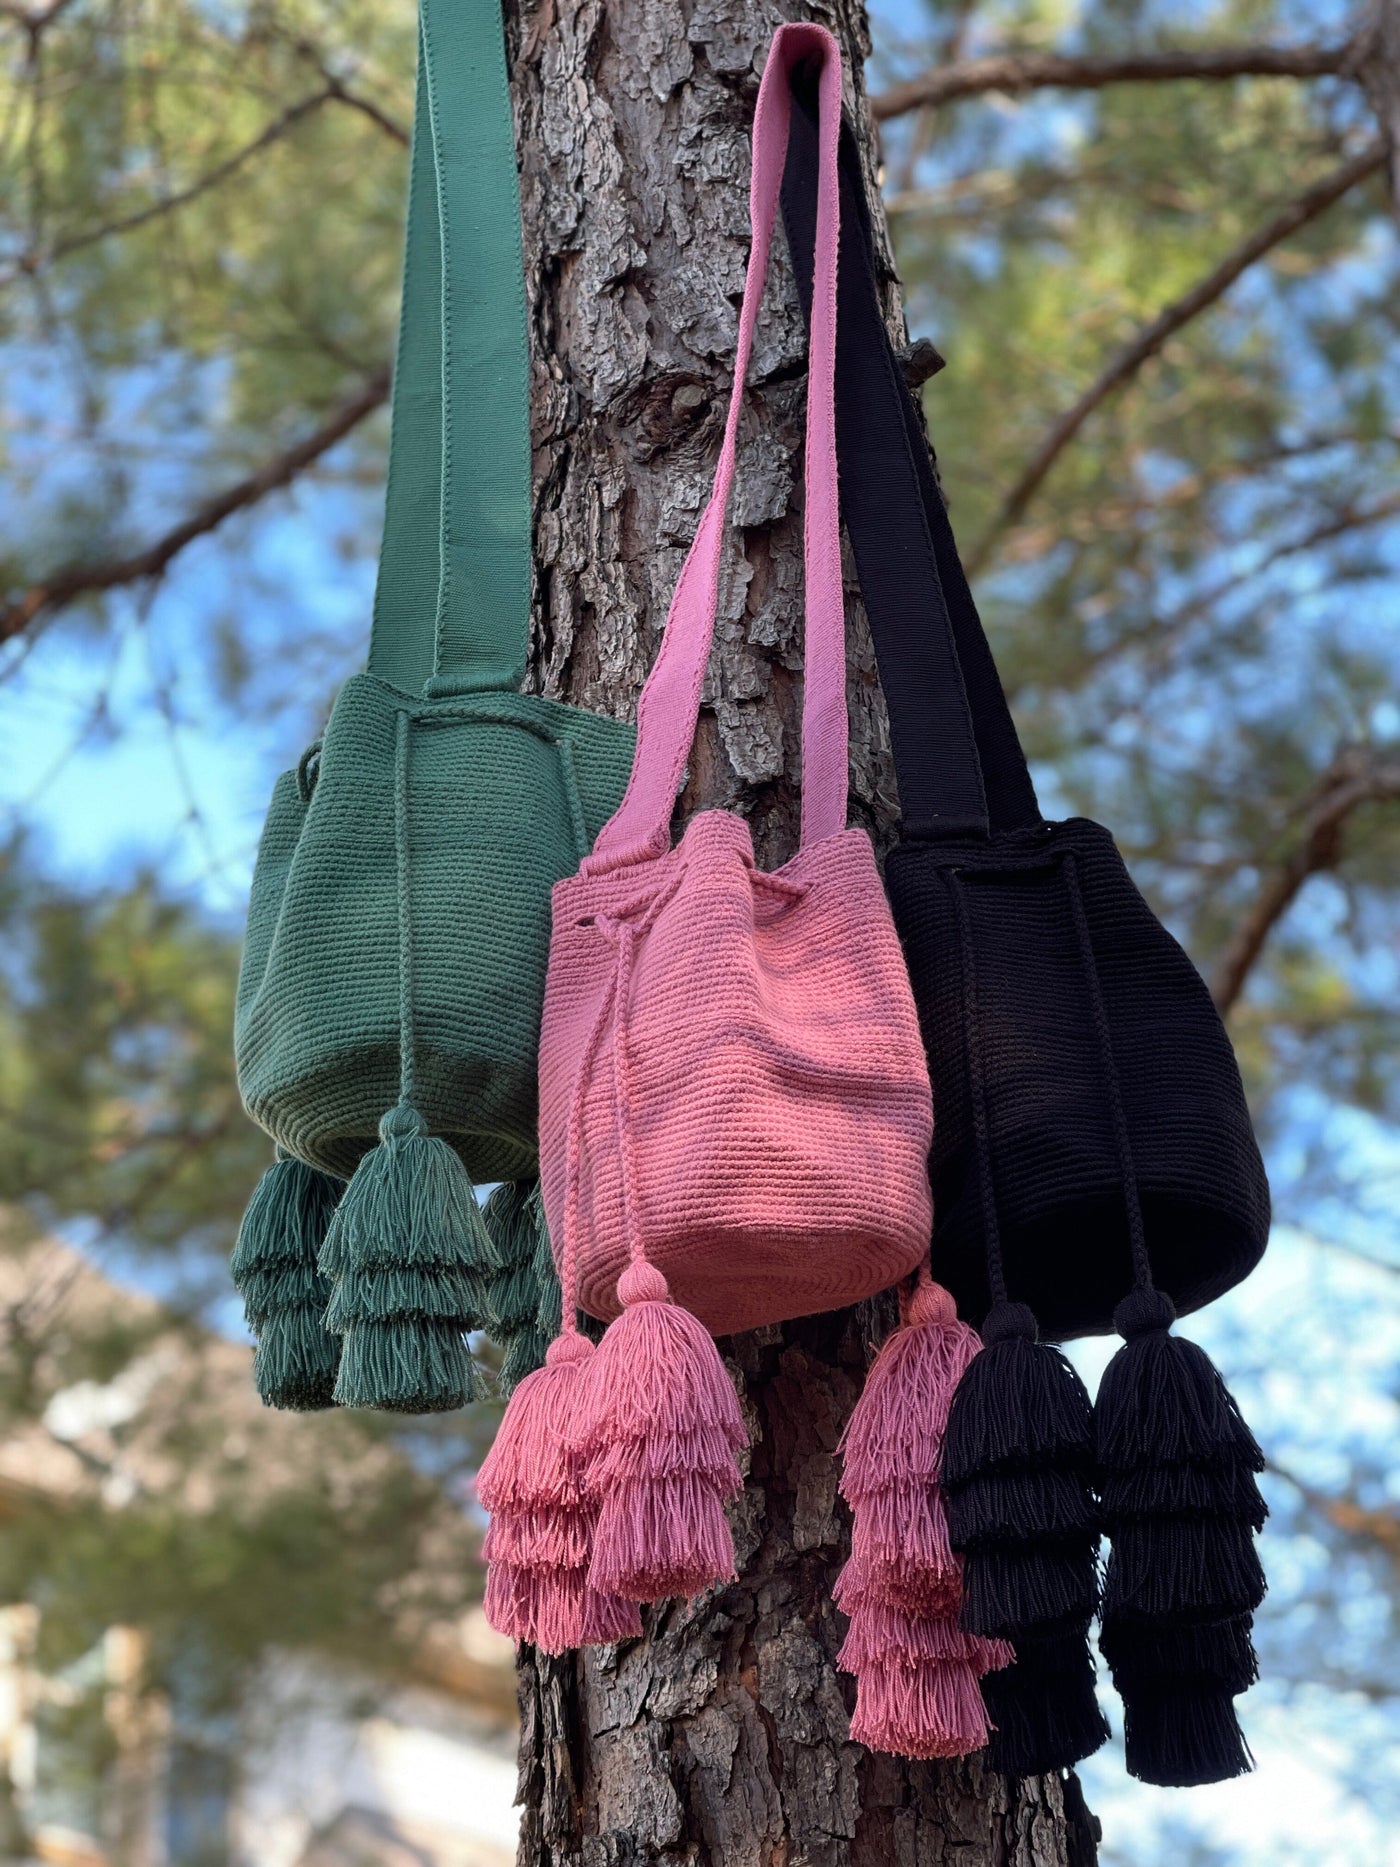  Tassel Bag for Spring/Summer | Cute Crochet Crossbody Purses with Tassels | Colorful 4u